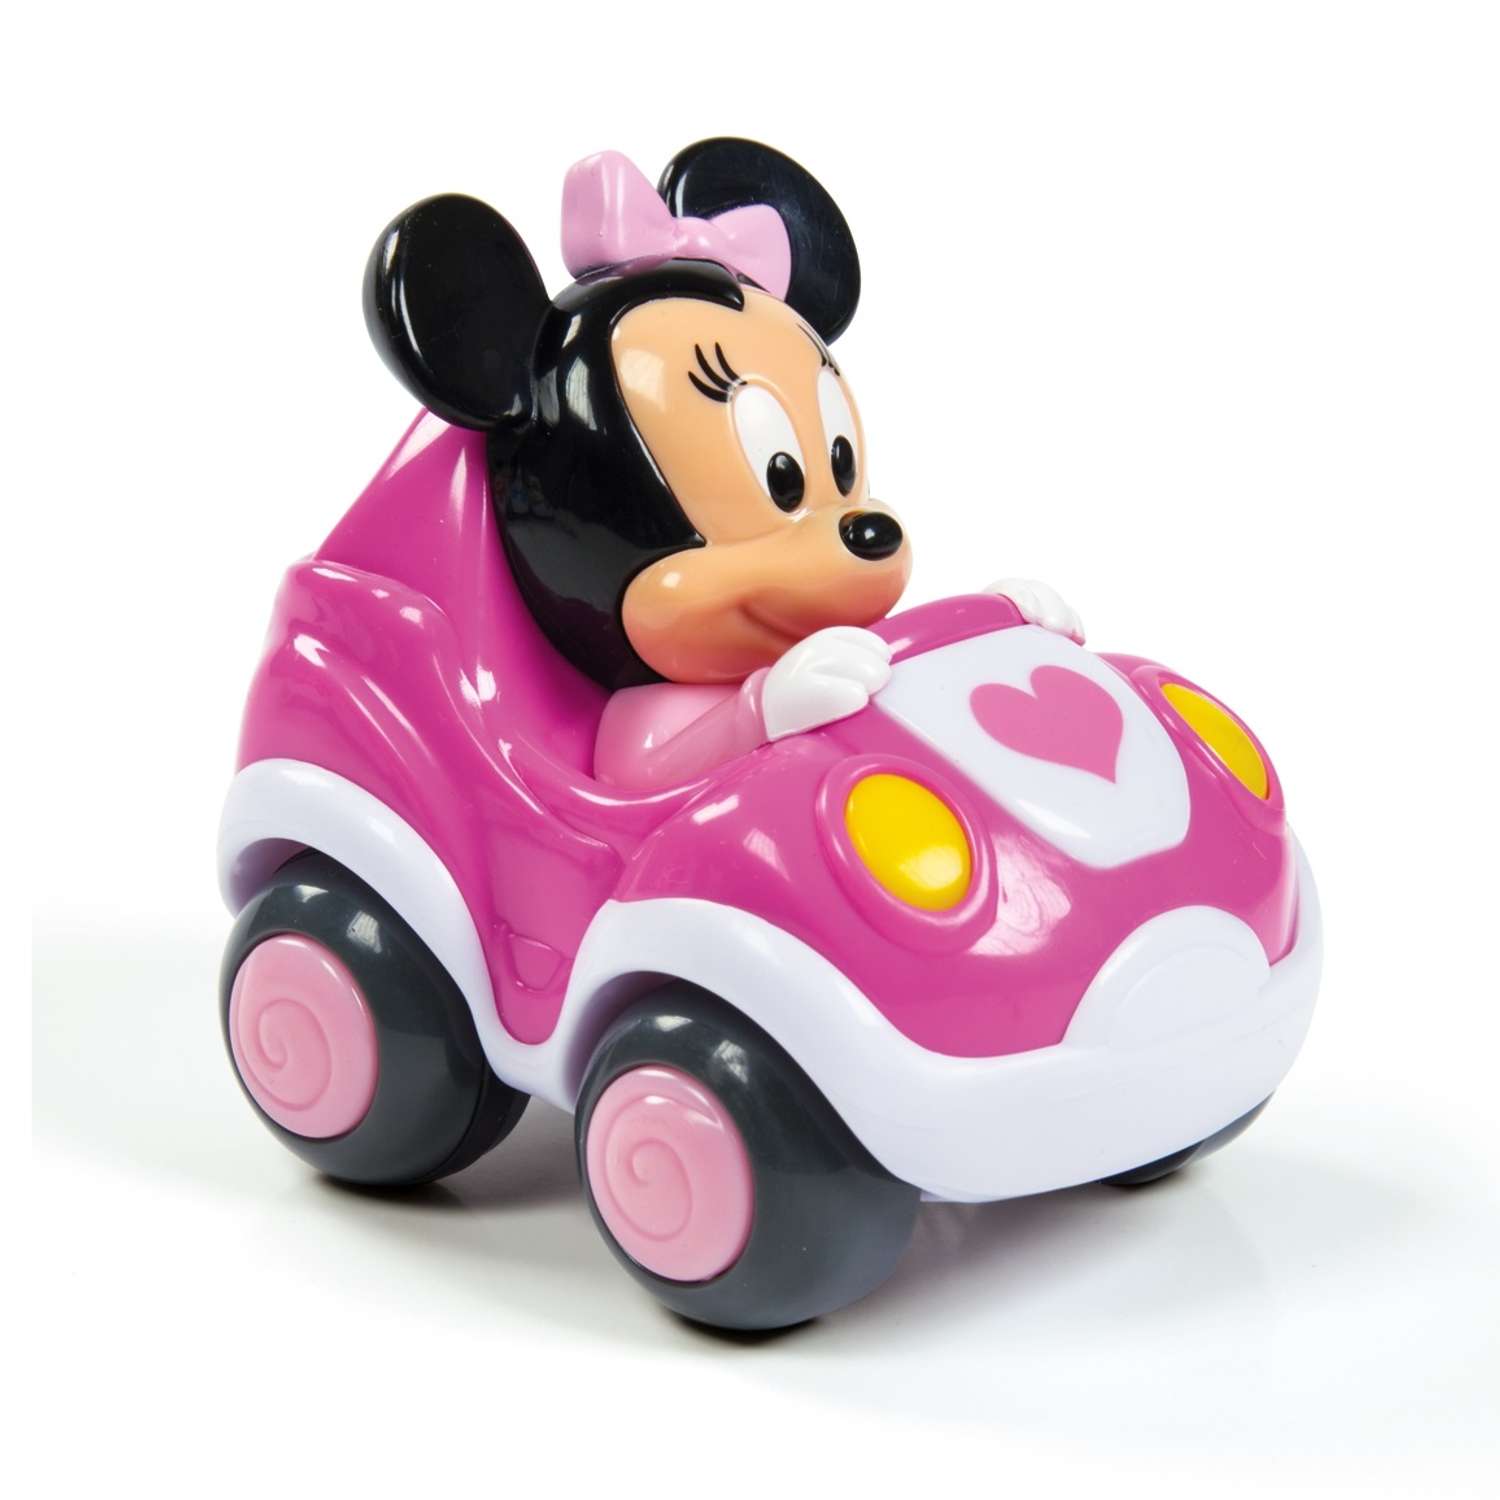 Игрушка развивающая Clementoni Baby Машинка Минни Мауса - фото 1